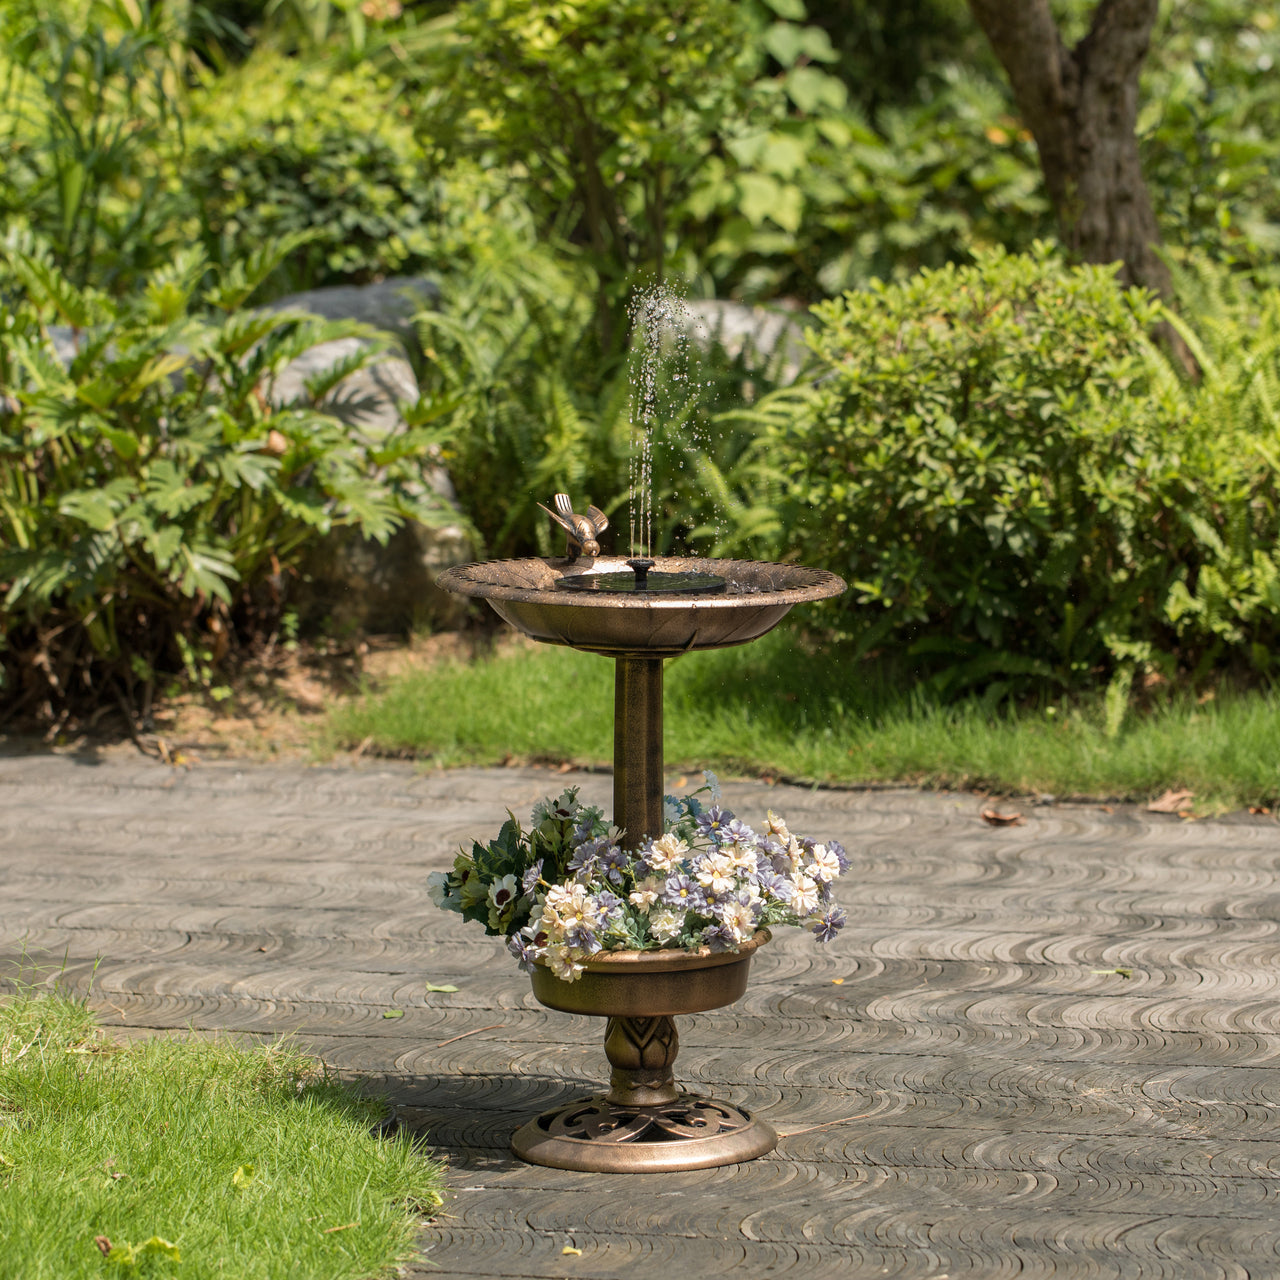 Zen Outdoor Decor Garden Bird Bath and Solar Powered Fountain - Personal Hour for Yoga and Meditations 